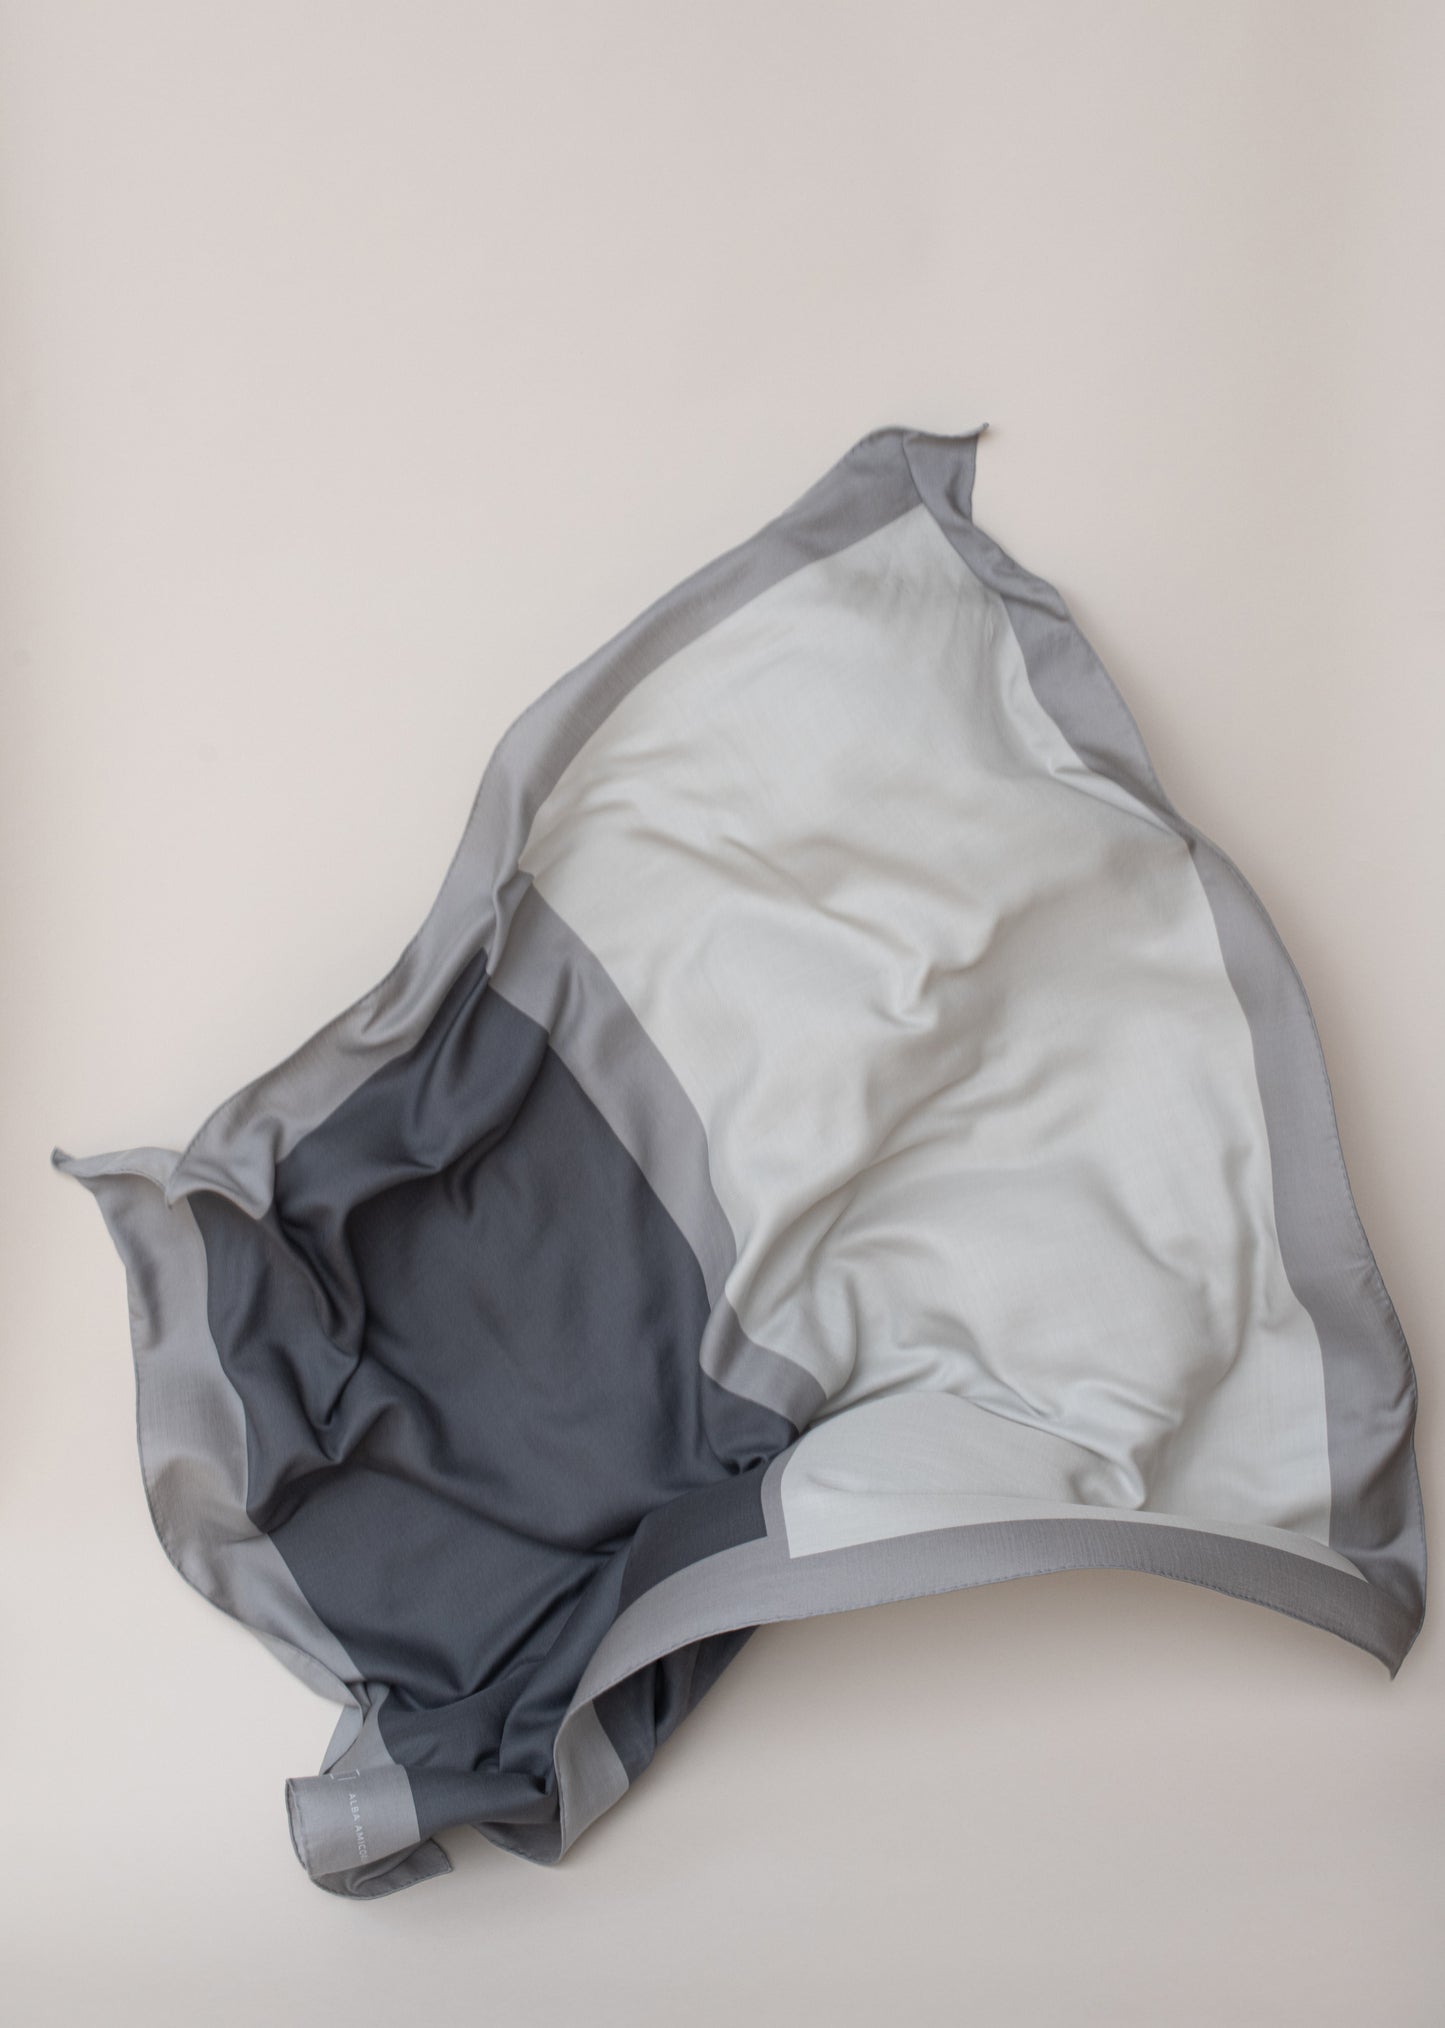 Intonation 02, soft woollen shawl by Alba Amicorum, in grey tones, hand rolled hems